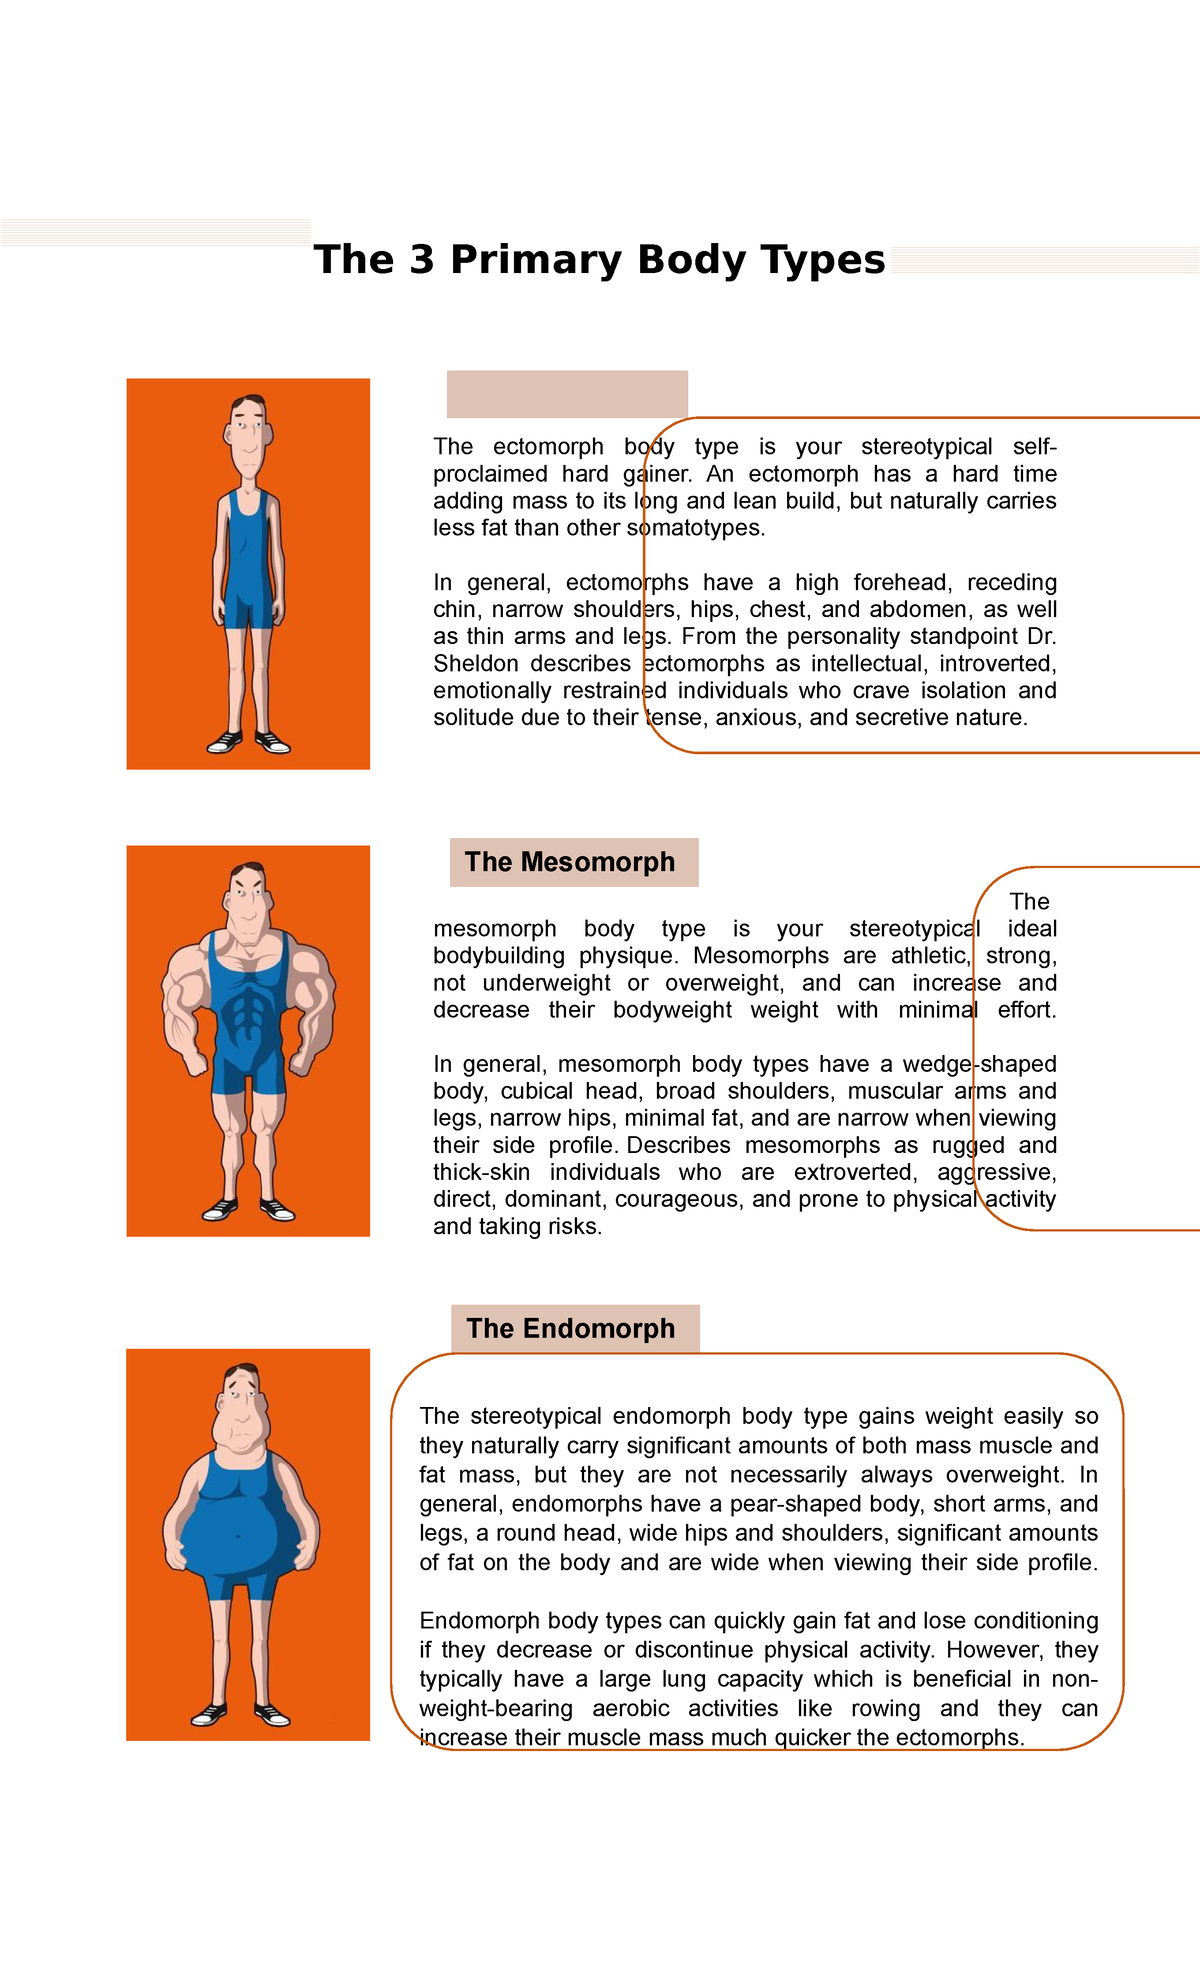 Different body types (somatotypes) (A) Ectomorph, (B) mesomorph